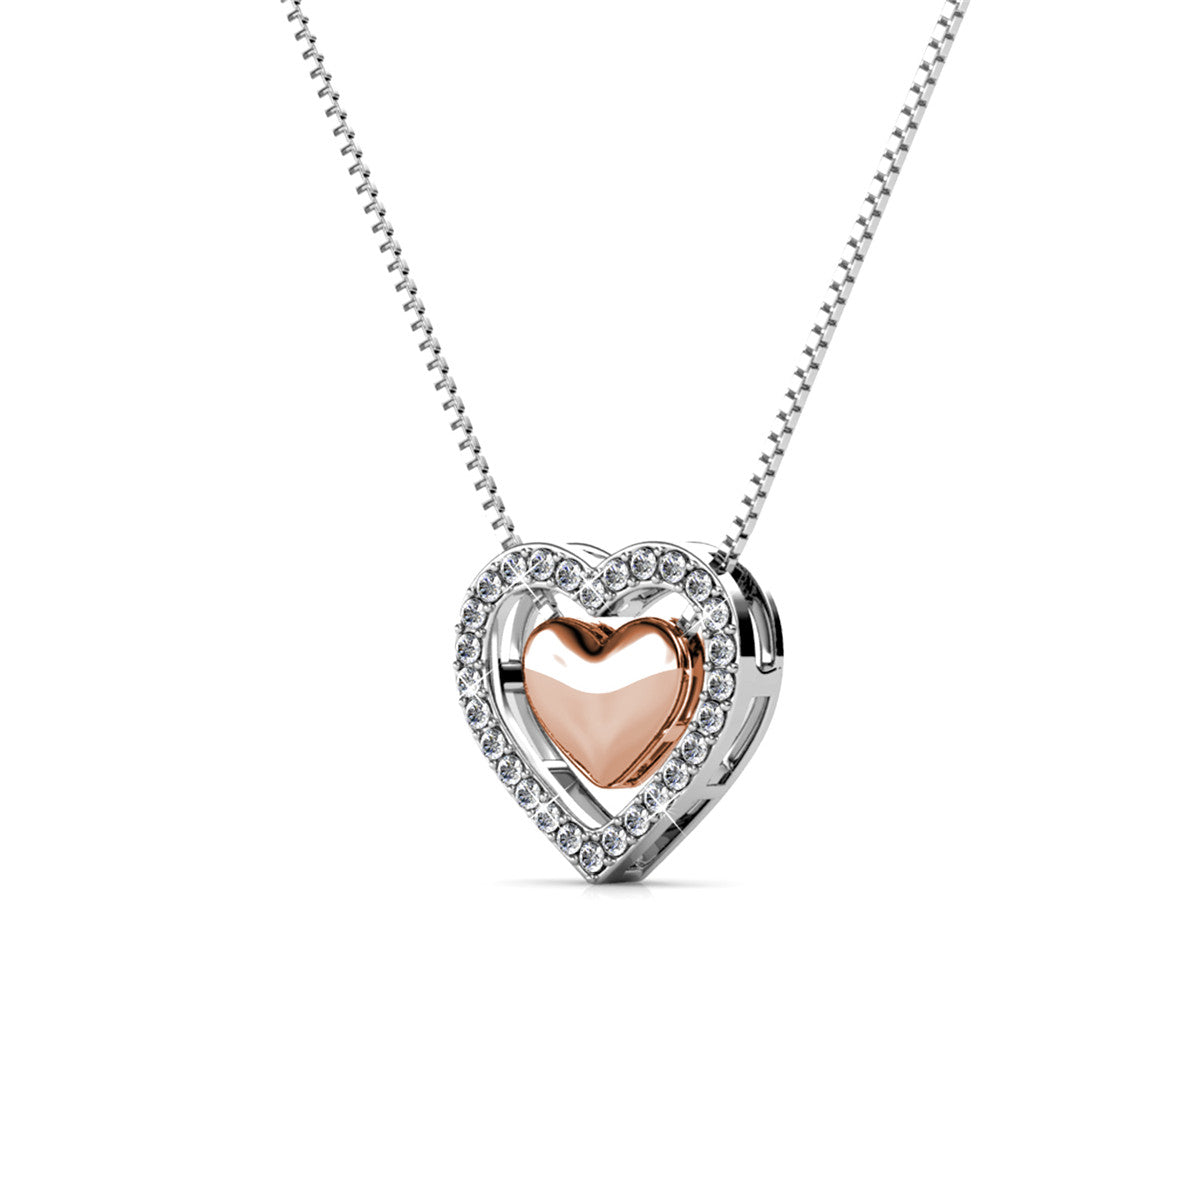 Zendaya 18k White Gold Plated Heart Necklace